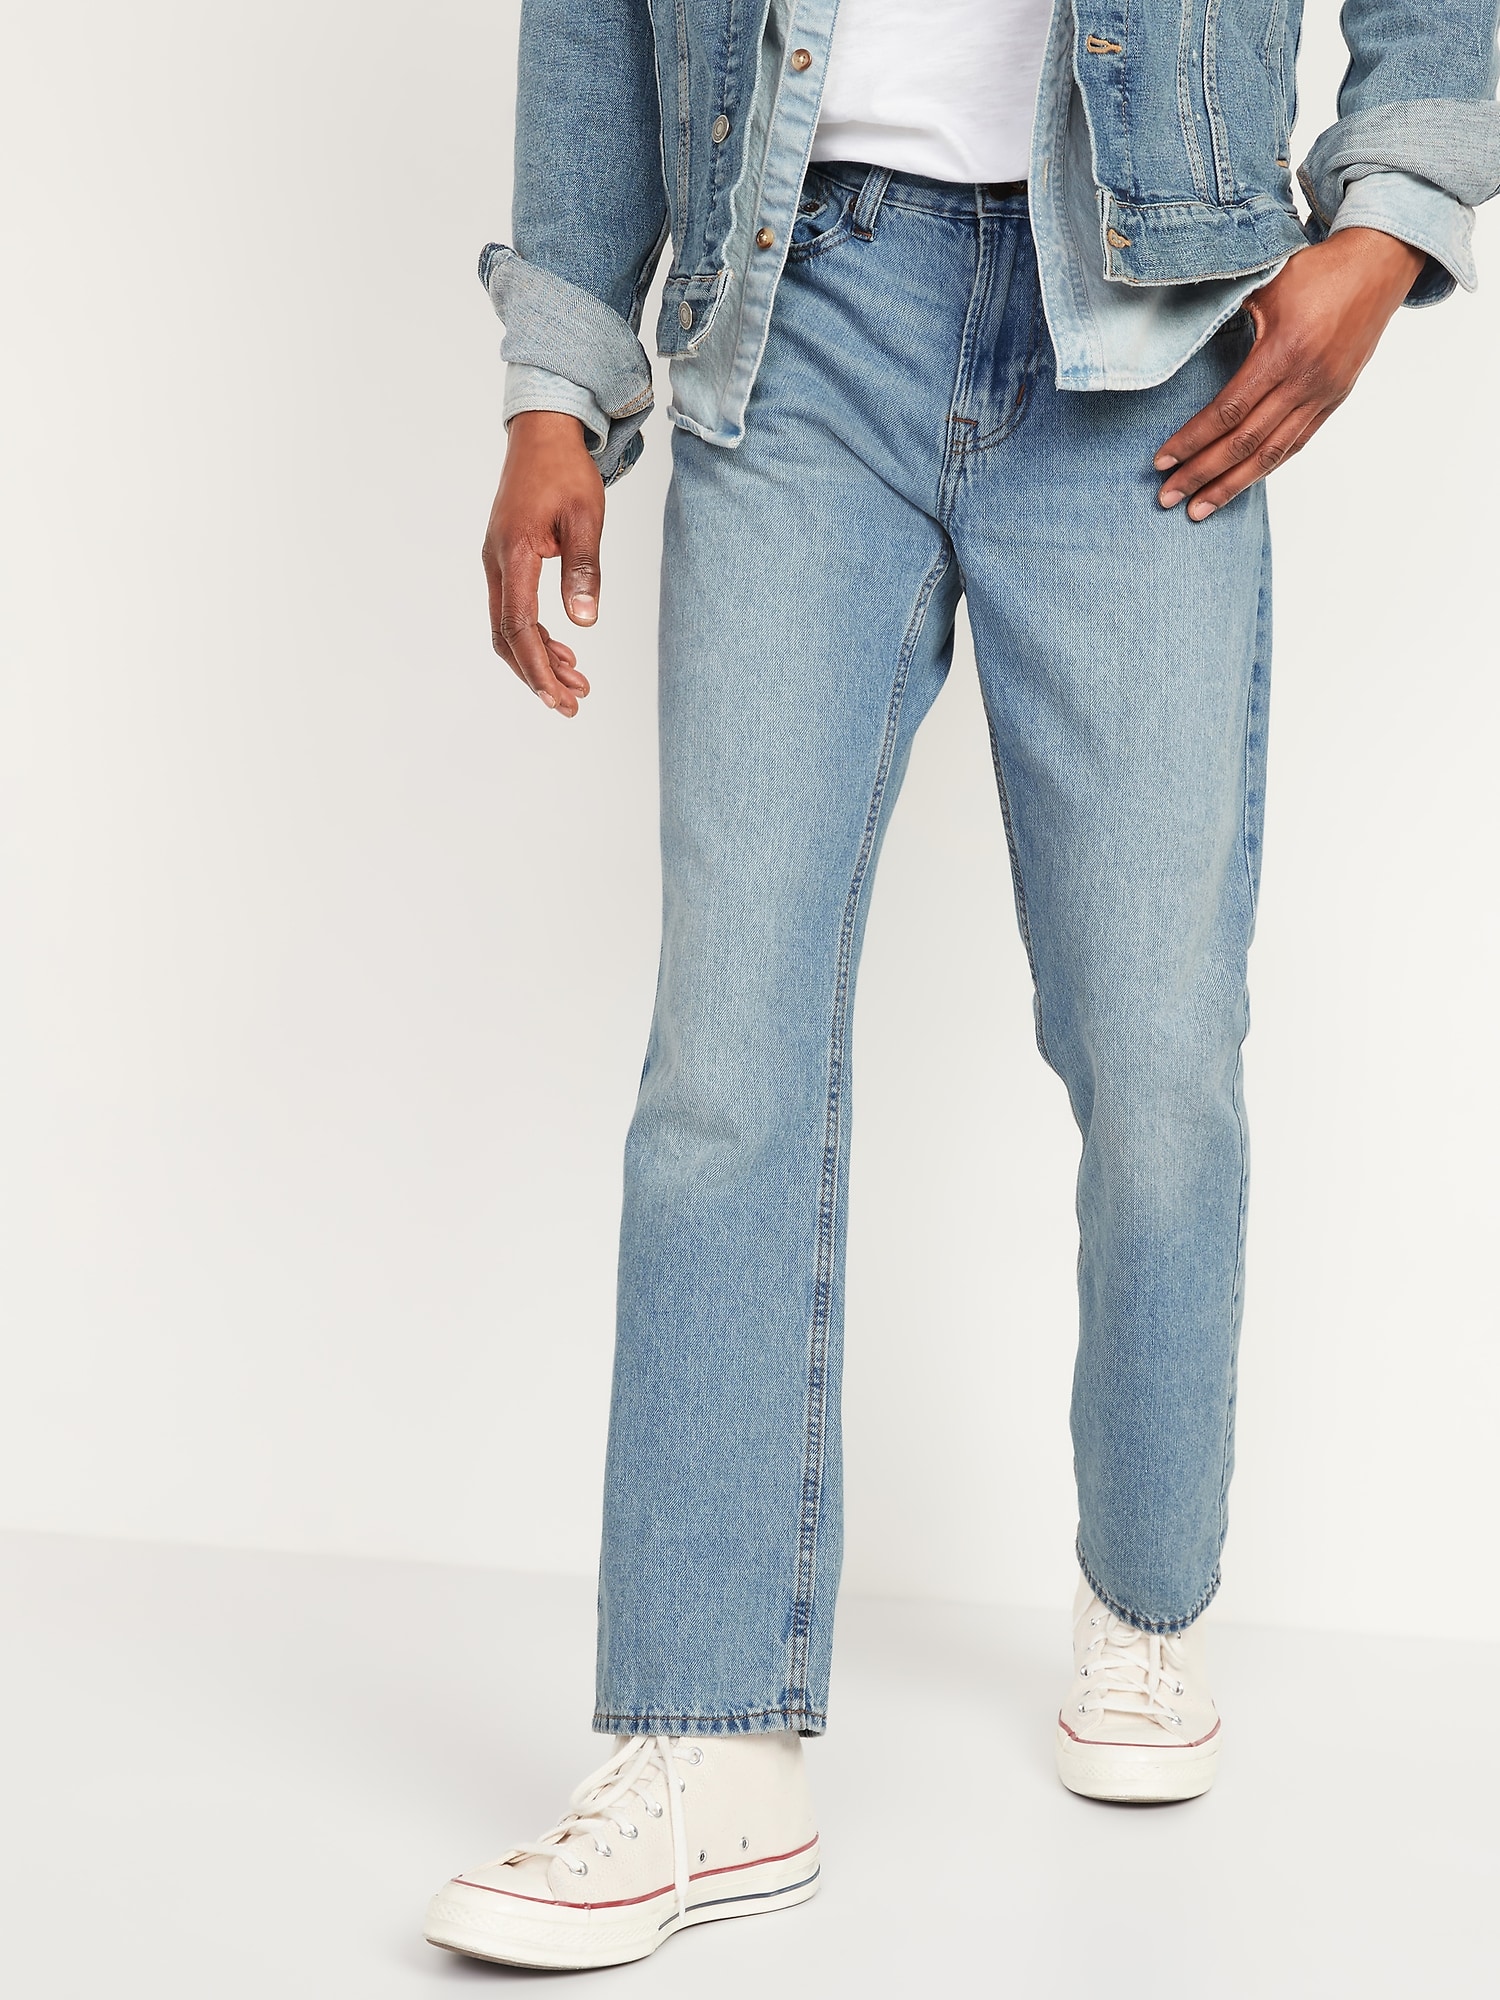 Straight Rigid Jeans For Men